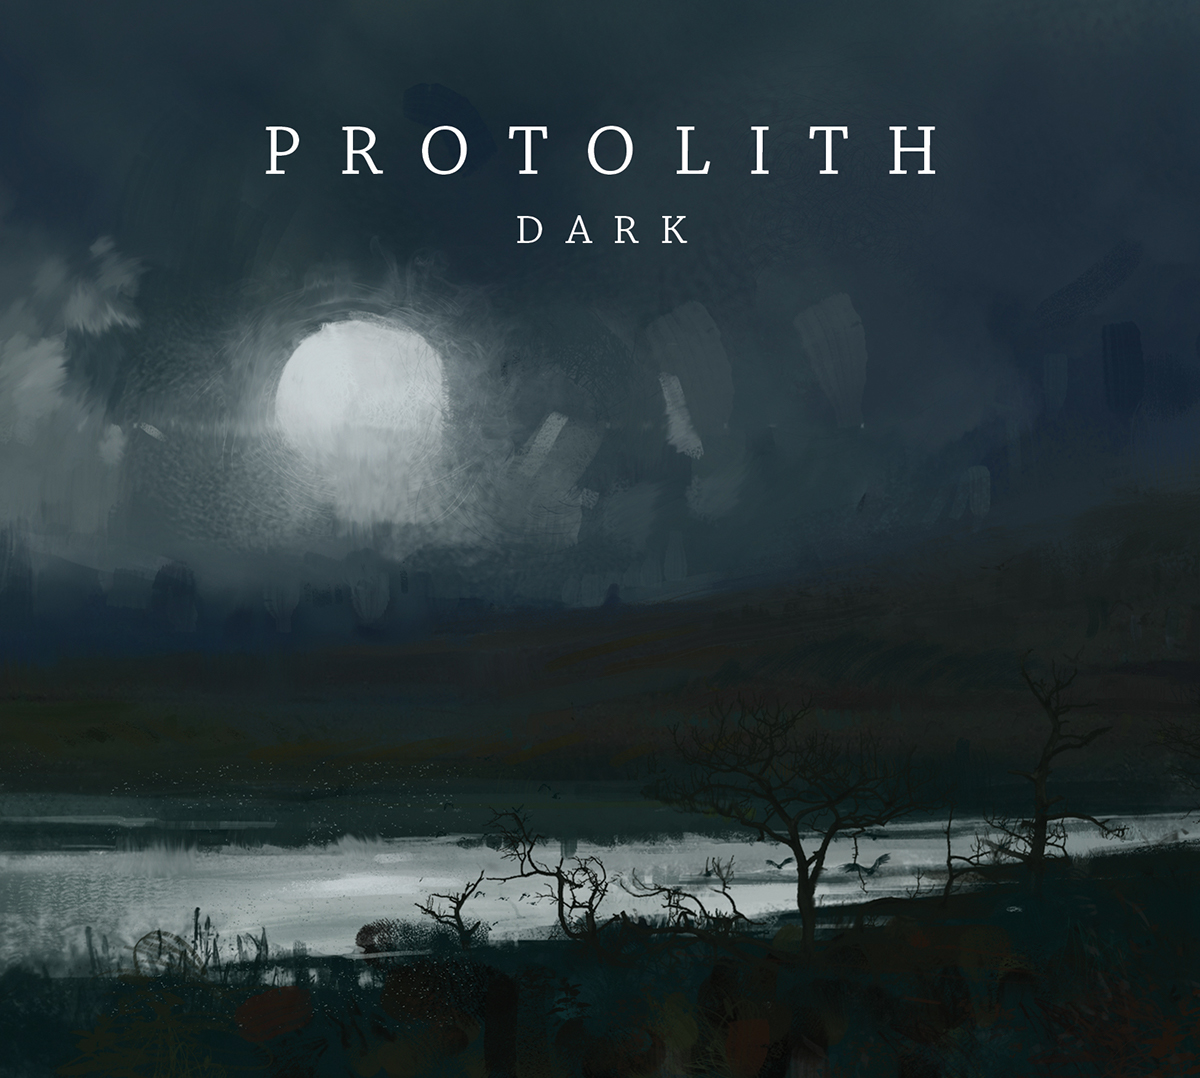 digital painting album art album cover metal protolith dark Landscape Night landscape moon lake hills Landscape Painting